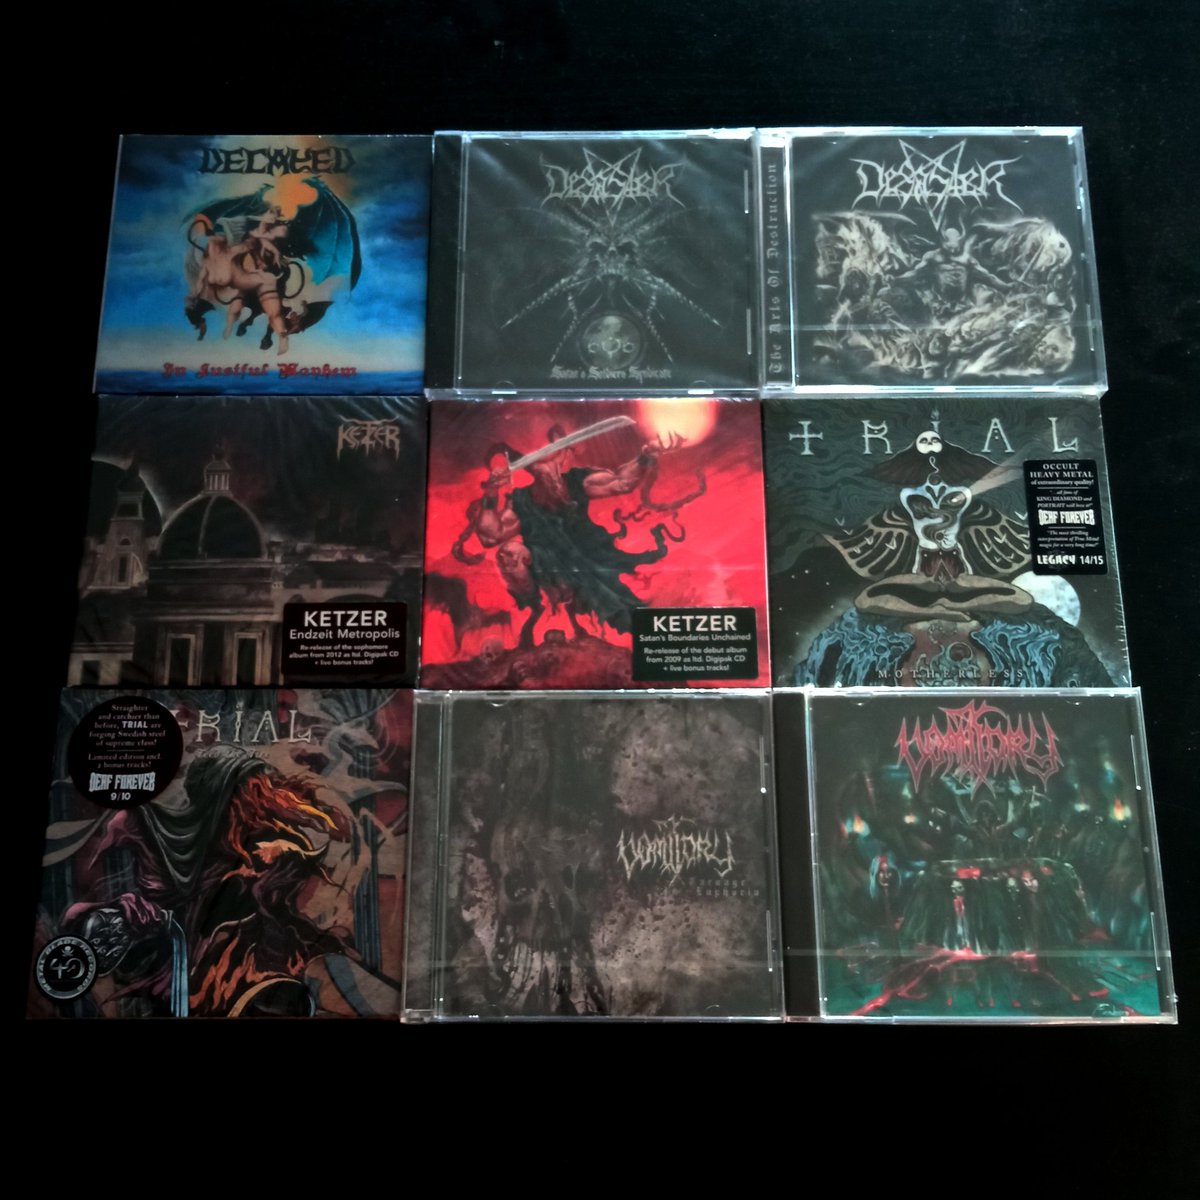 [IN STOCK NOW]
(Link for shop in bio)
#desaster #decayed #ketzer #cavernaabismal #helldprod #hellstore #hdprod #onlyundergroundisreal #vomitory #metalblade #occult #heavymetal #deathmetal #blackthrash #blackmetal #trial #swedenmetal #digicd #digipak #cd #instock